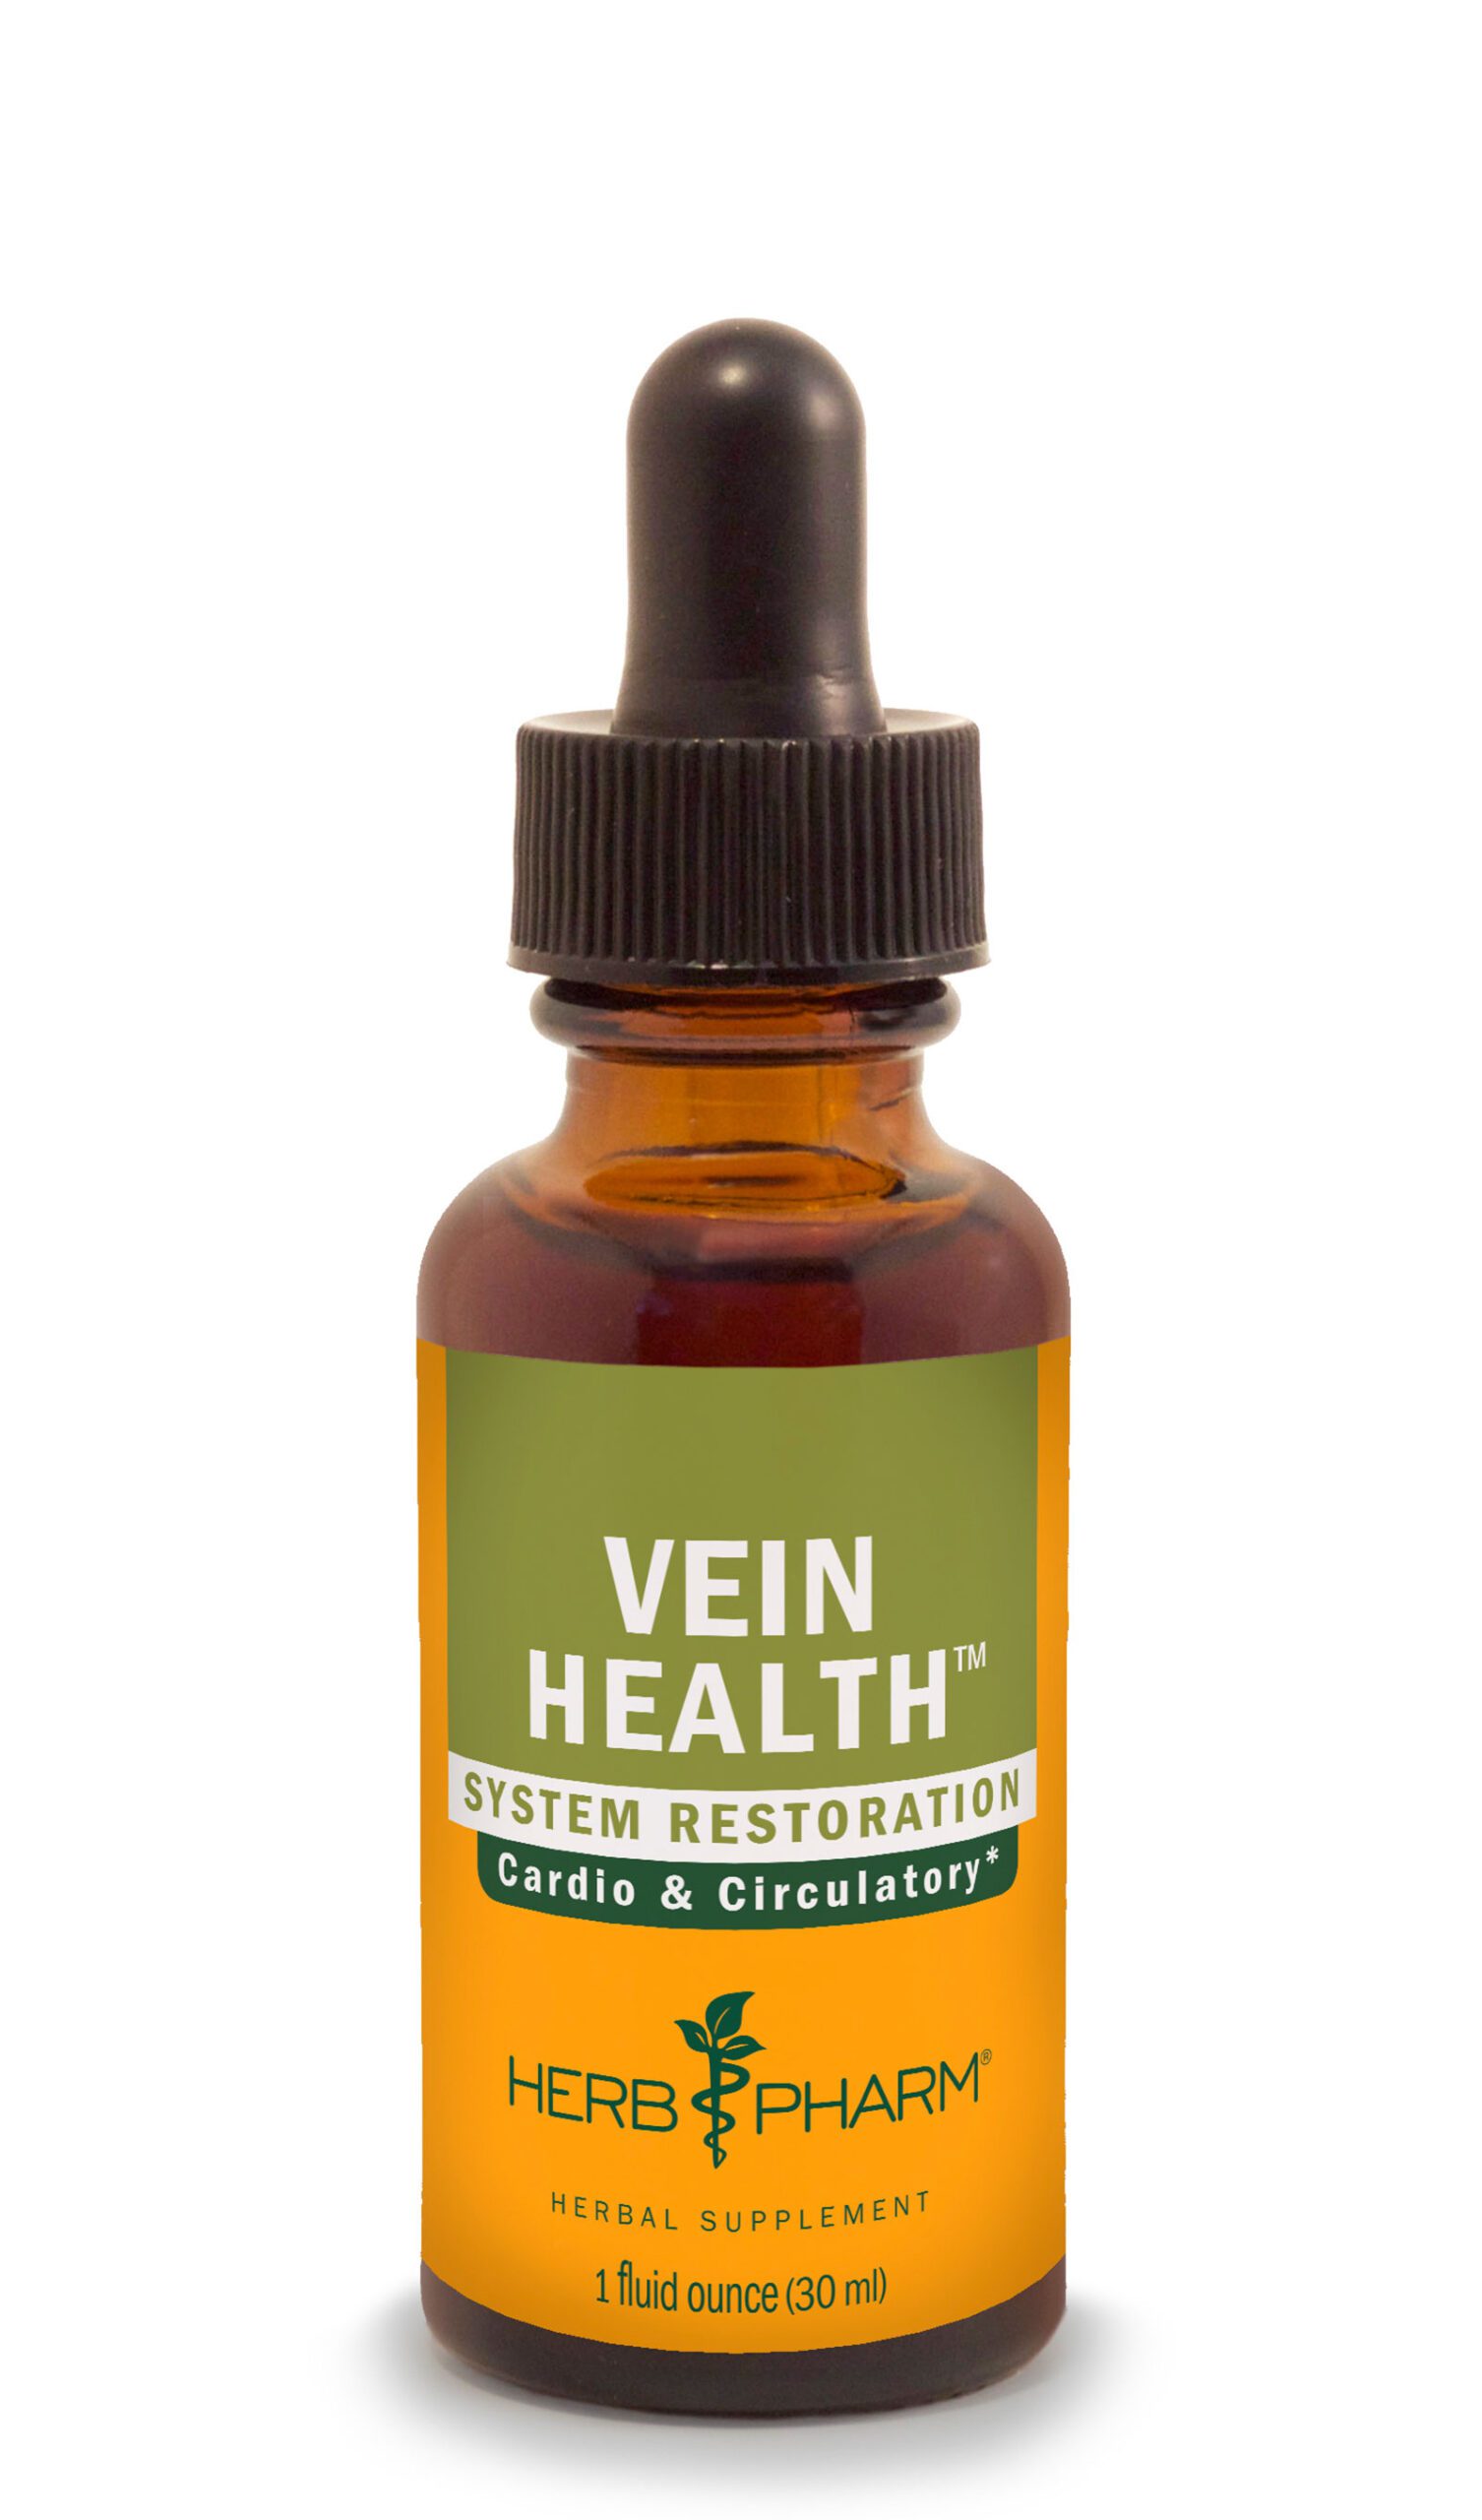 Product Listing Image for Herb Pharm Vein Health 1oz